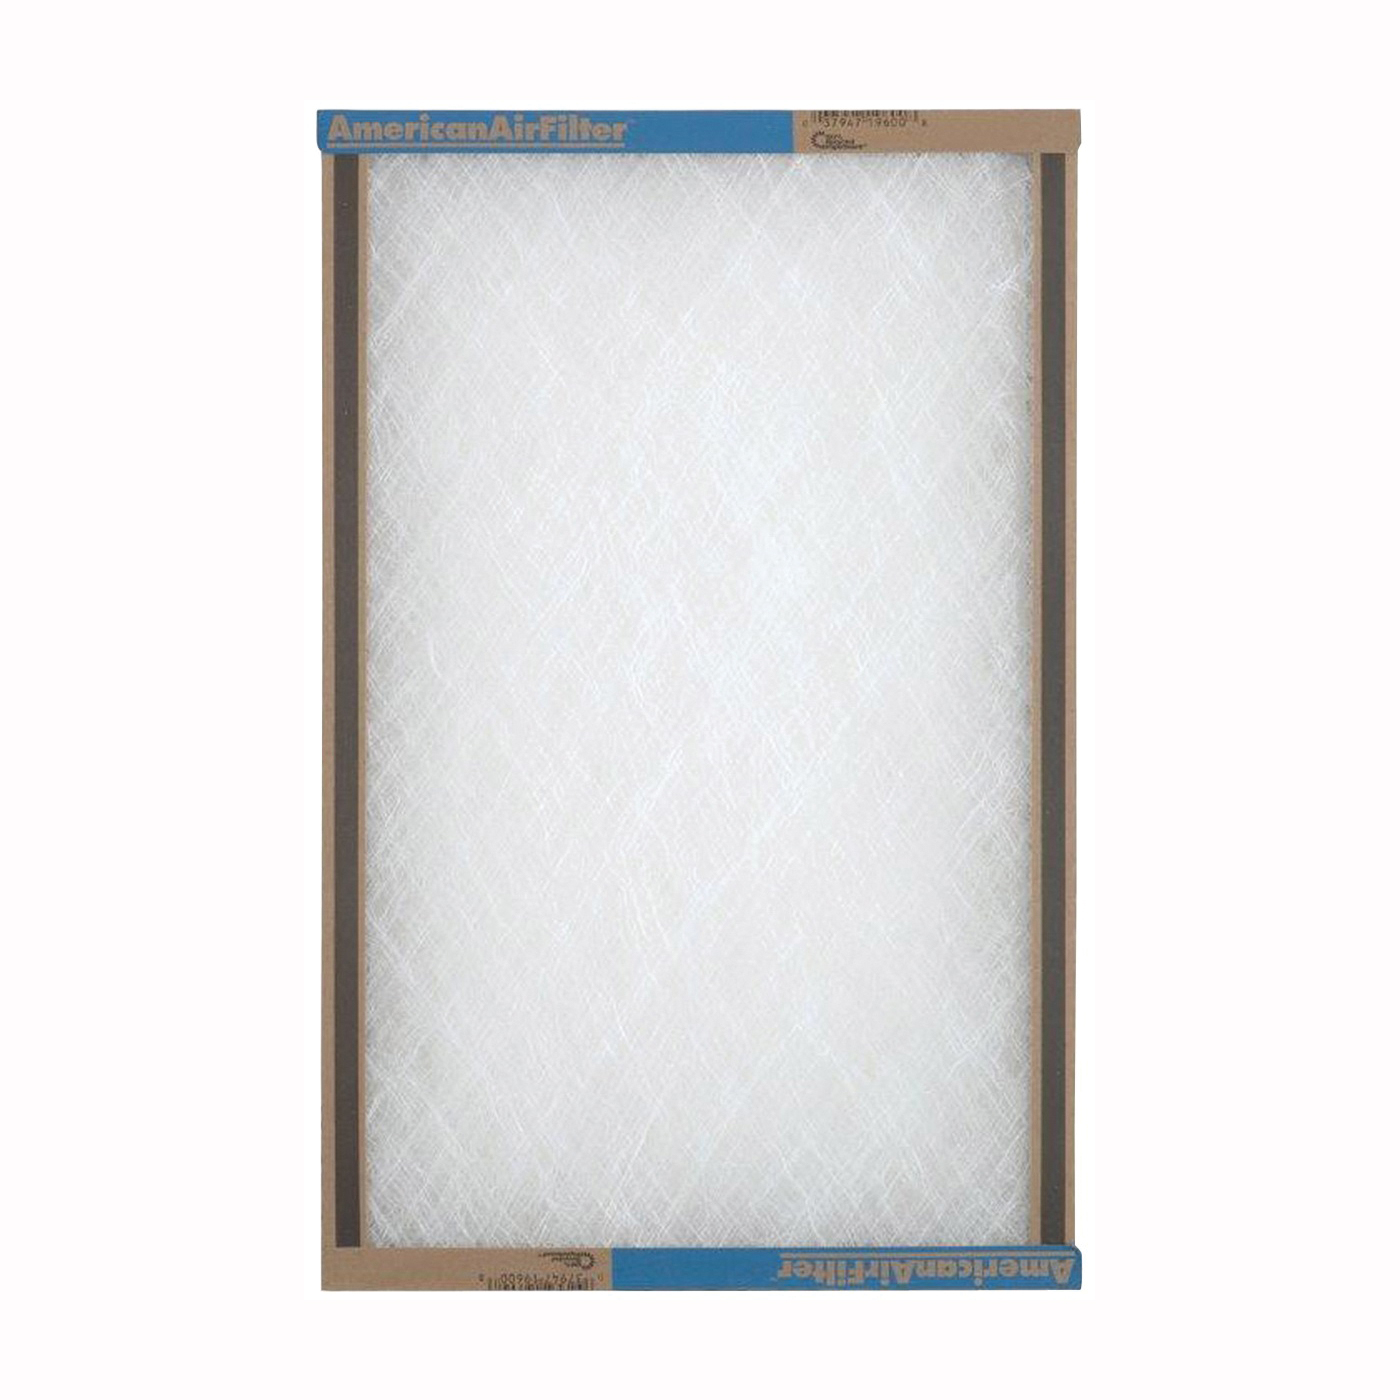 220-600-051 Panel Air Filter, 25 x 16 x 1, Chipboard Frame